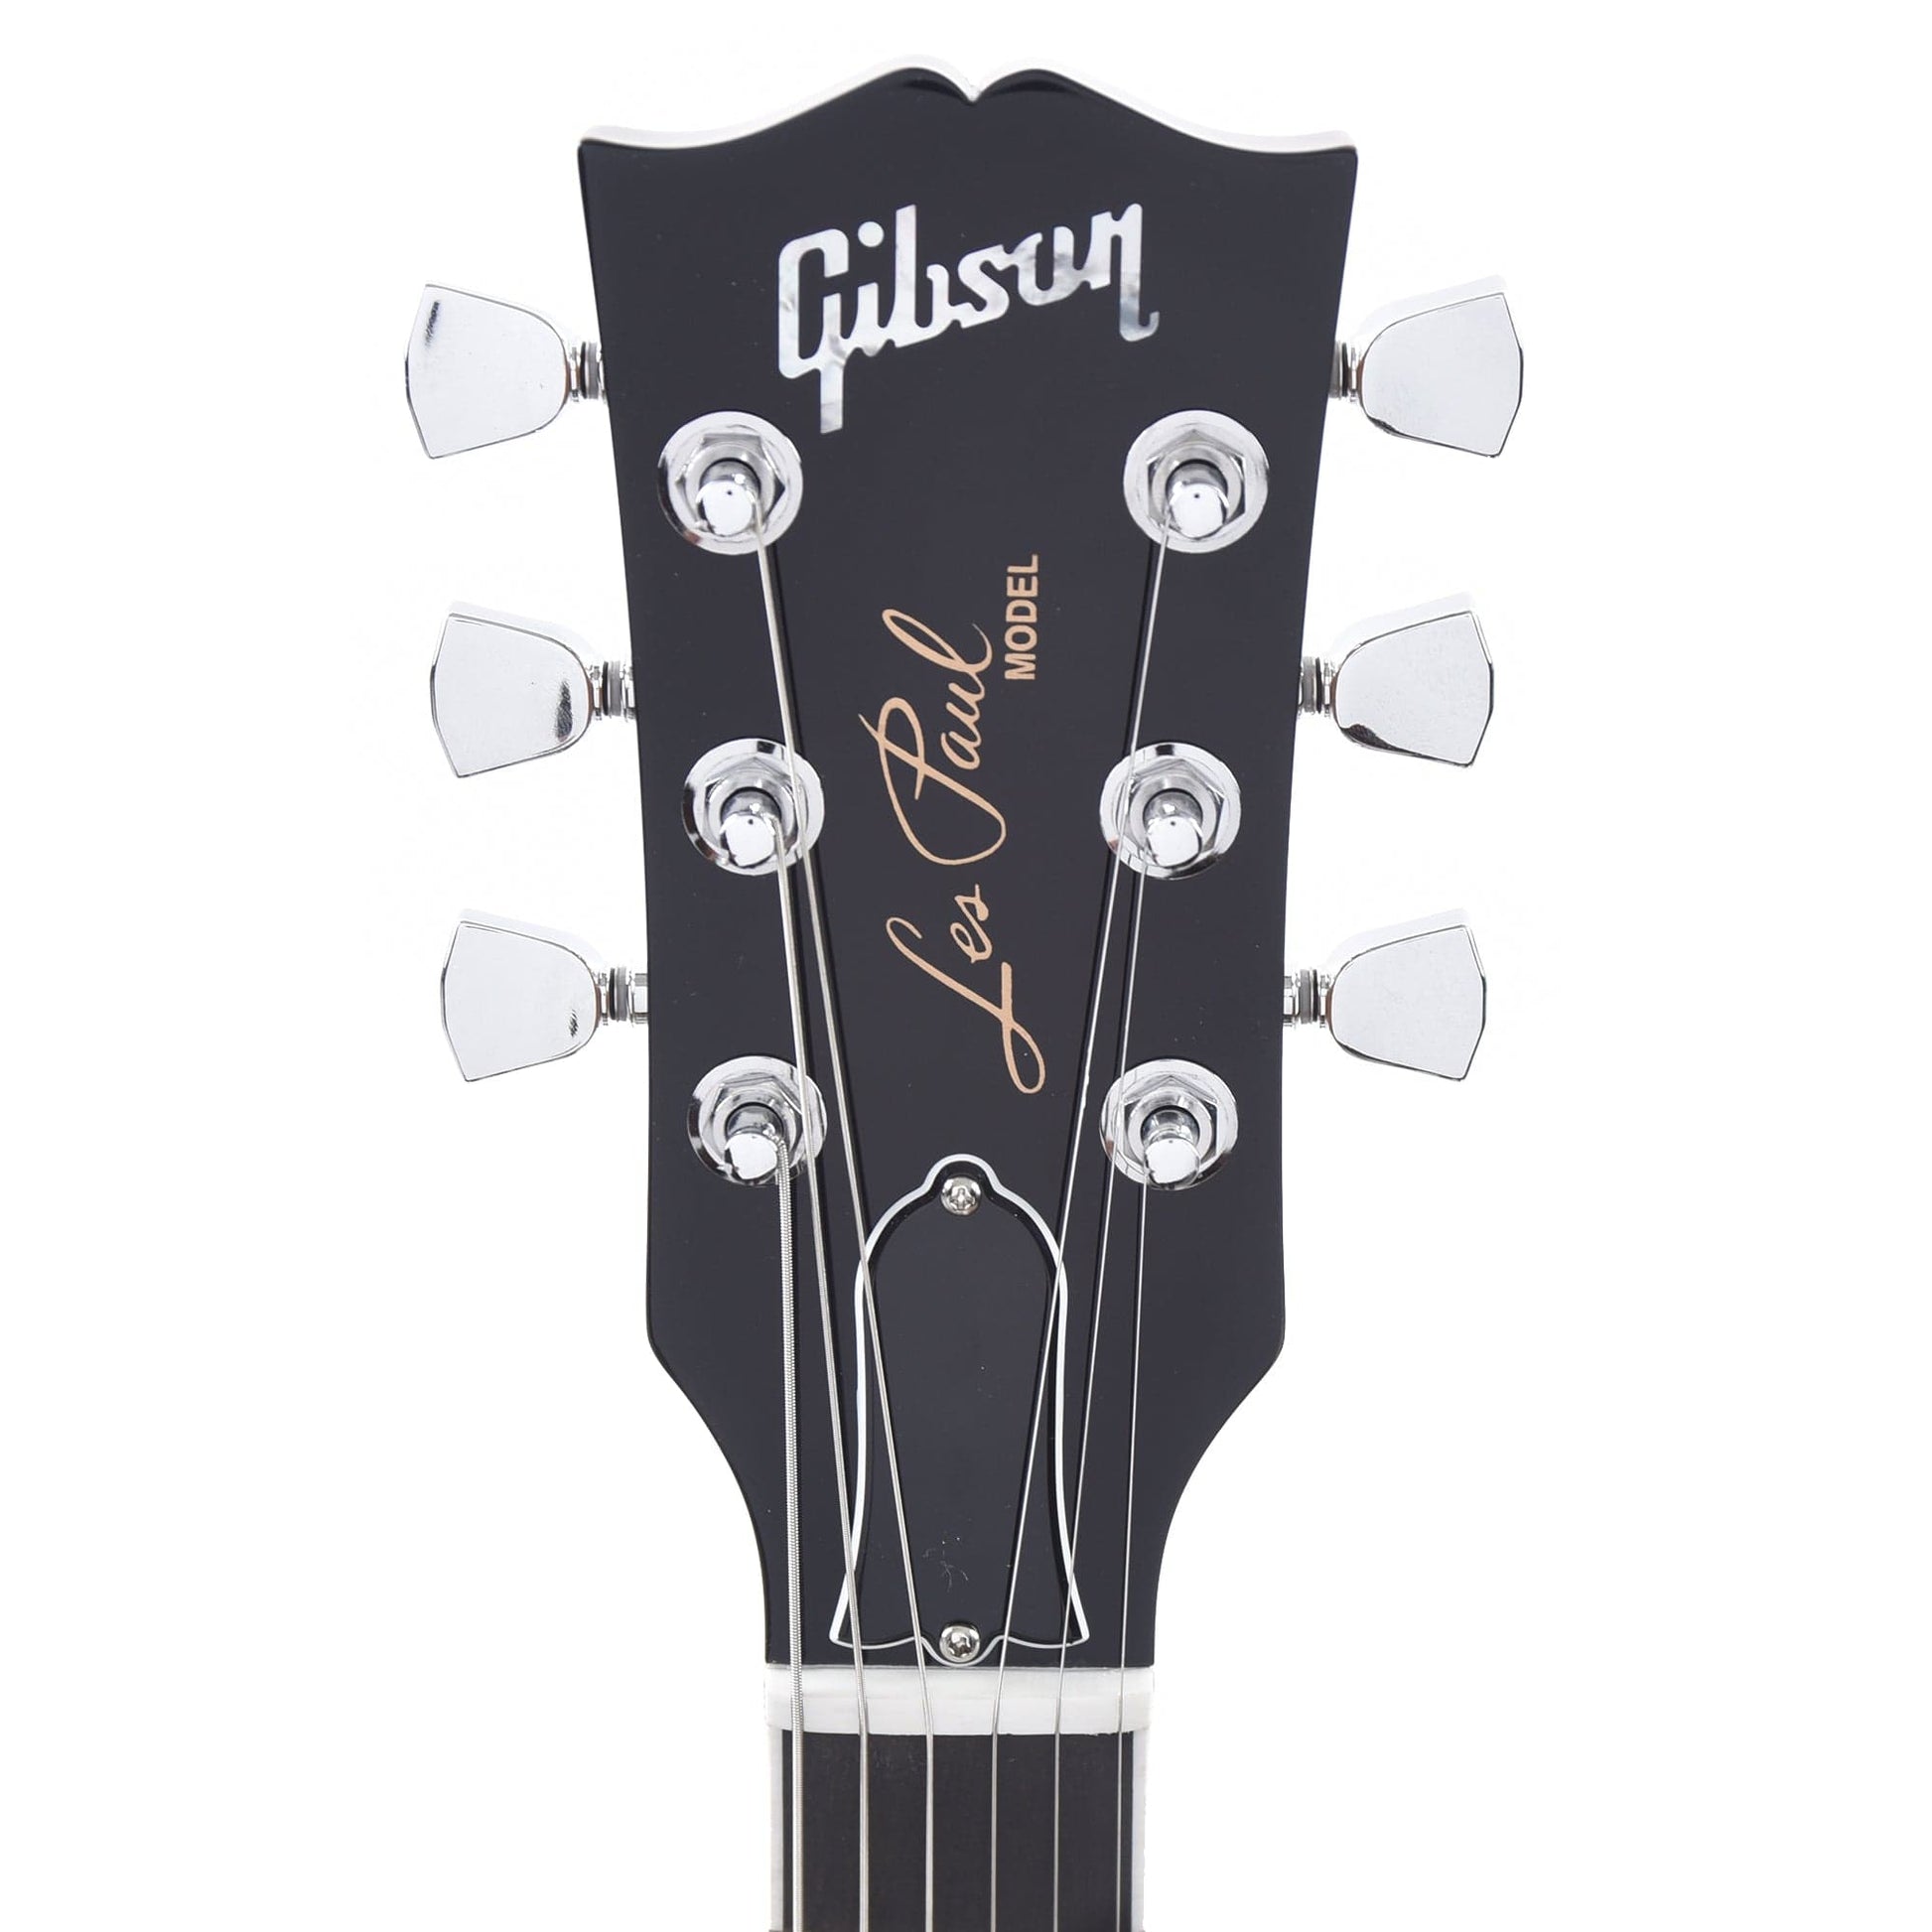 Gibson USA Les Paul Modern Faded Pelham Blue Electric Guitars / Solid Body